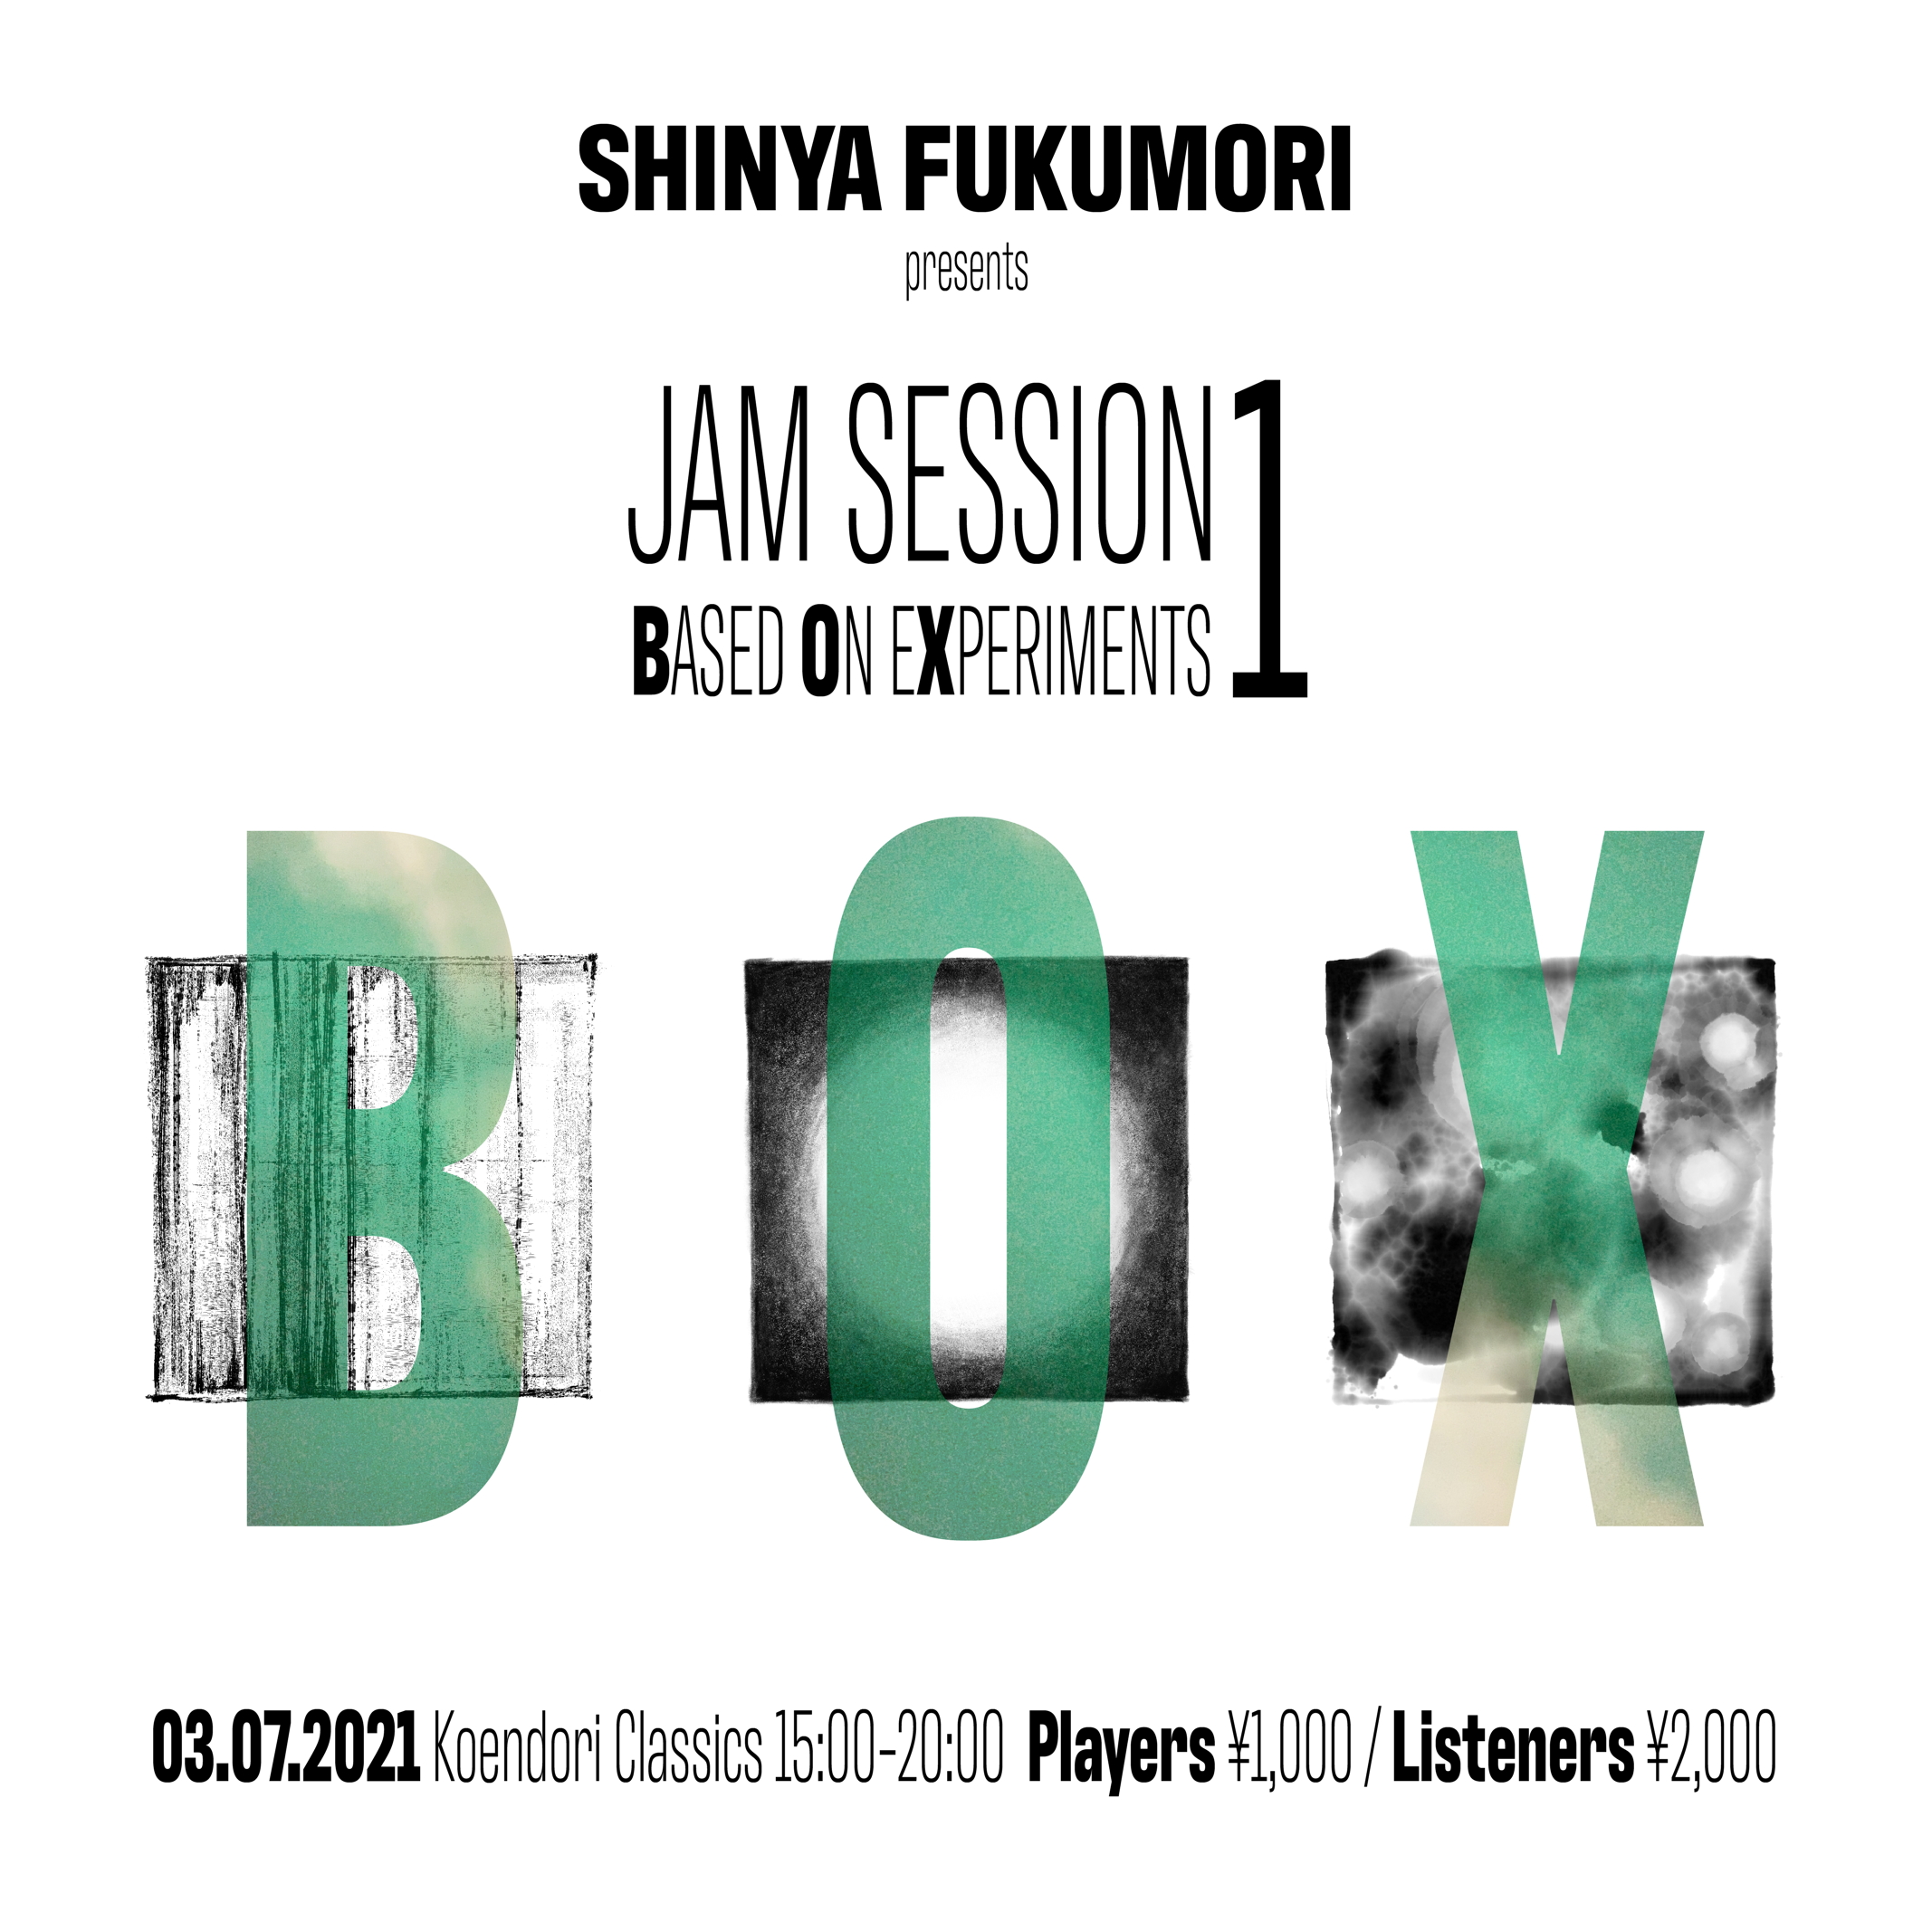 Shinya Fukumori presents JAM SESSION Based On Experiments 1